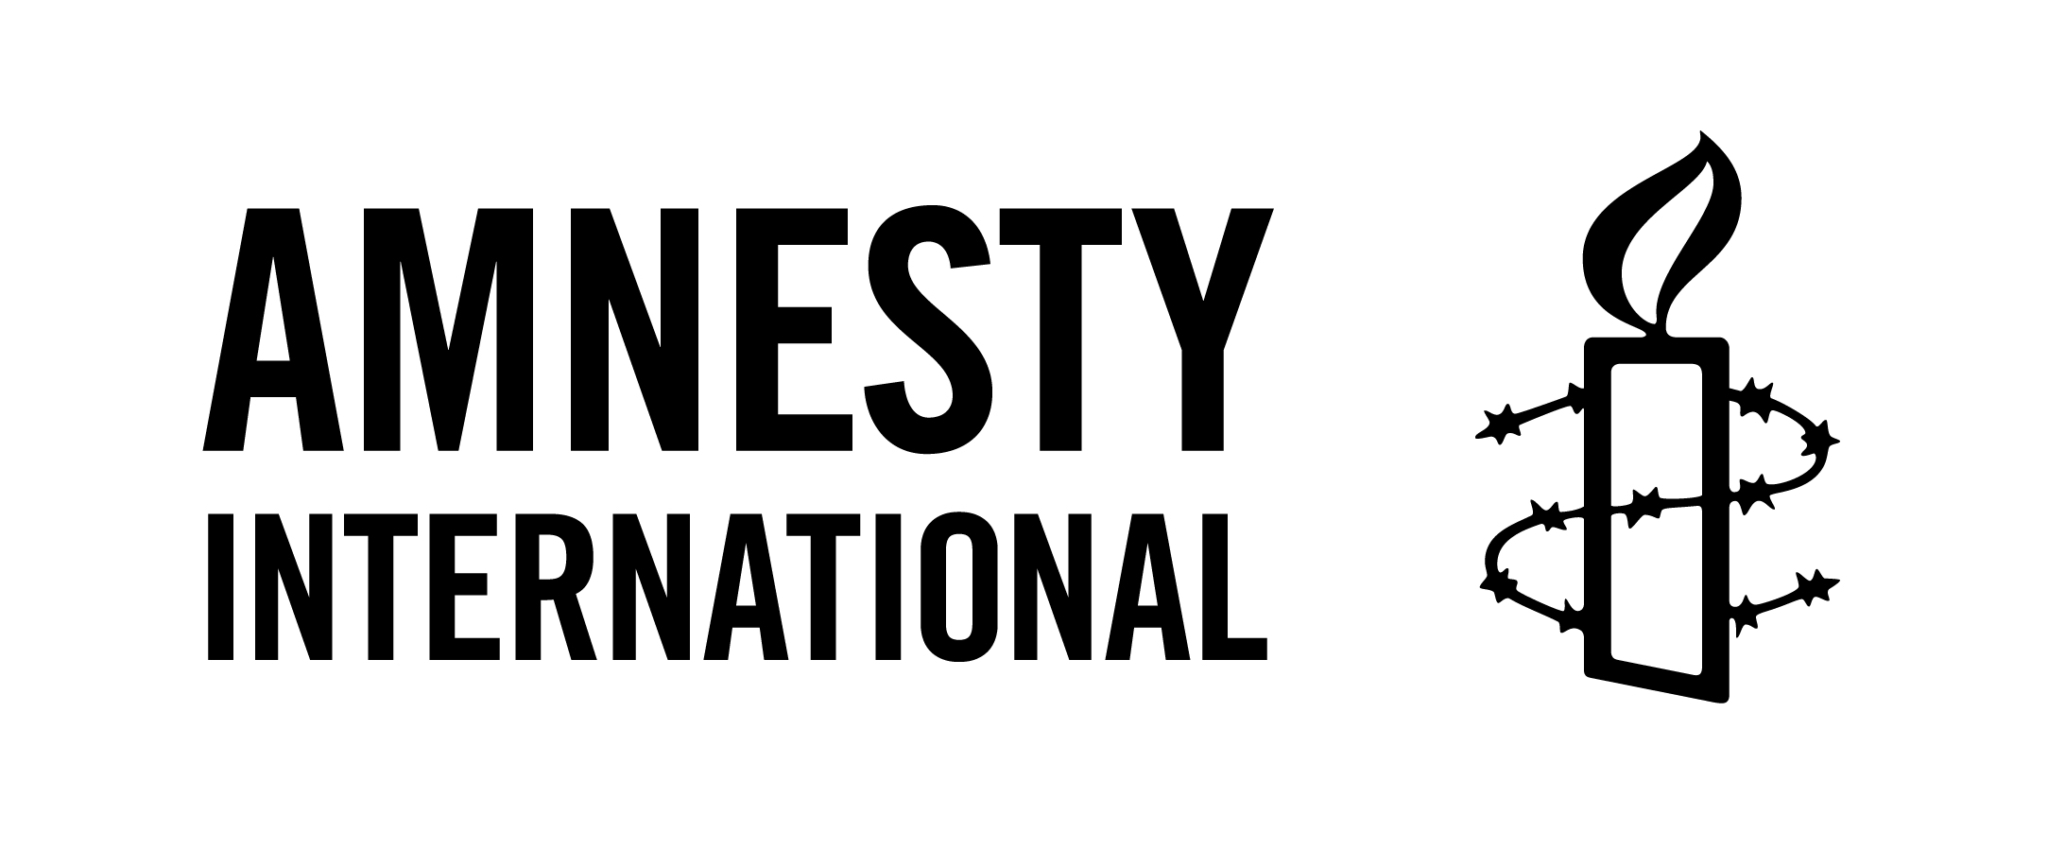 amnesty international logo with white background